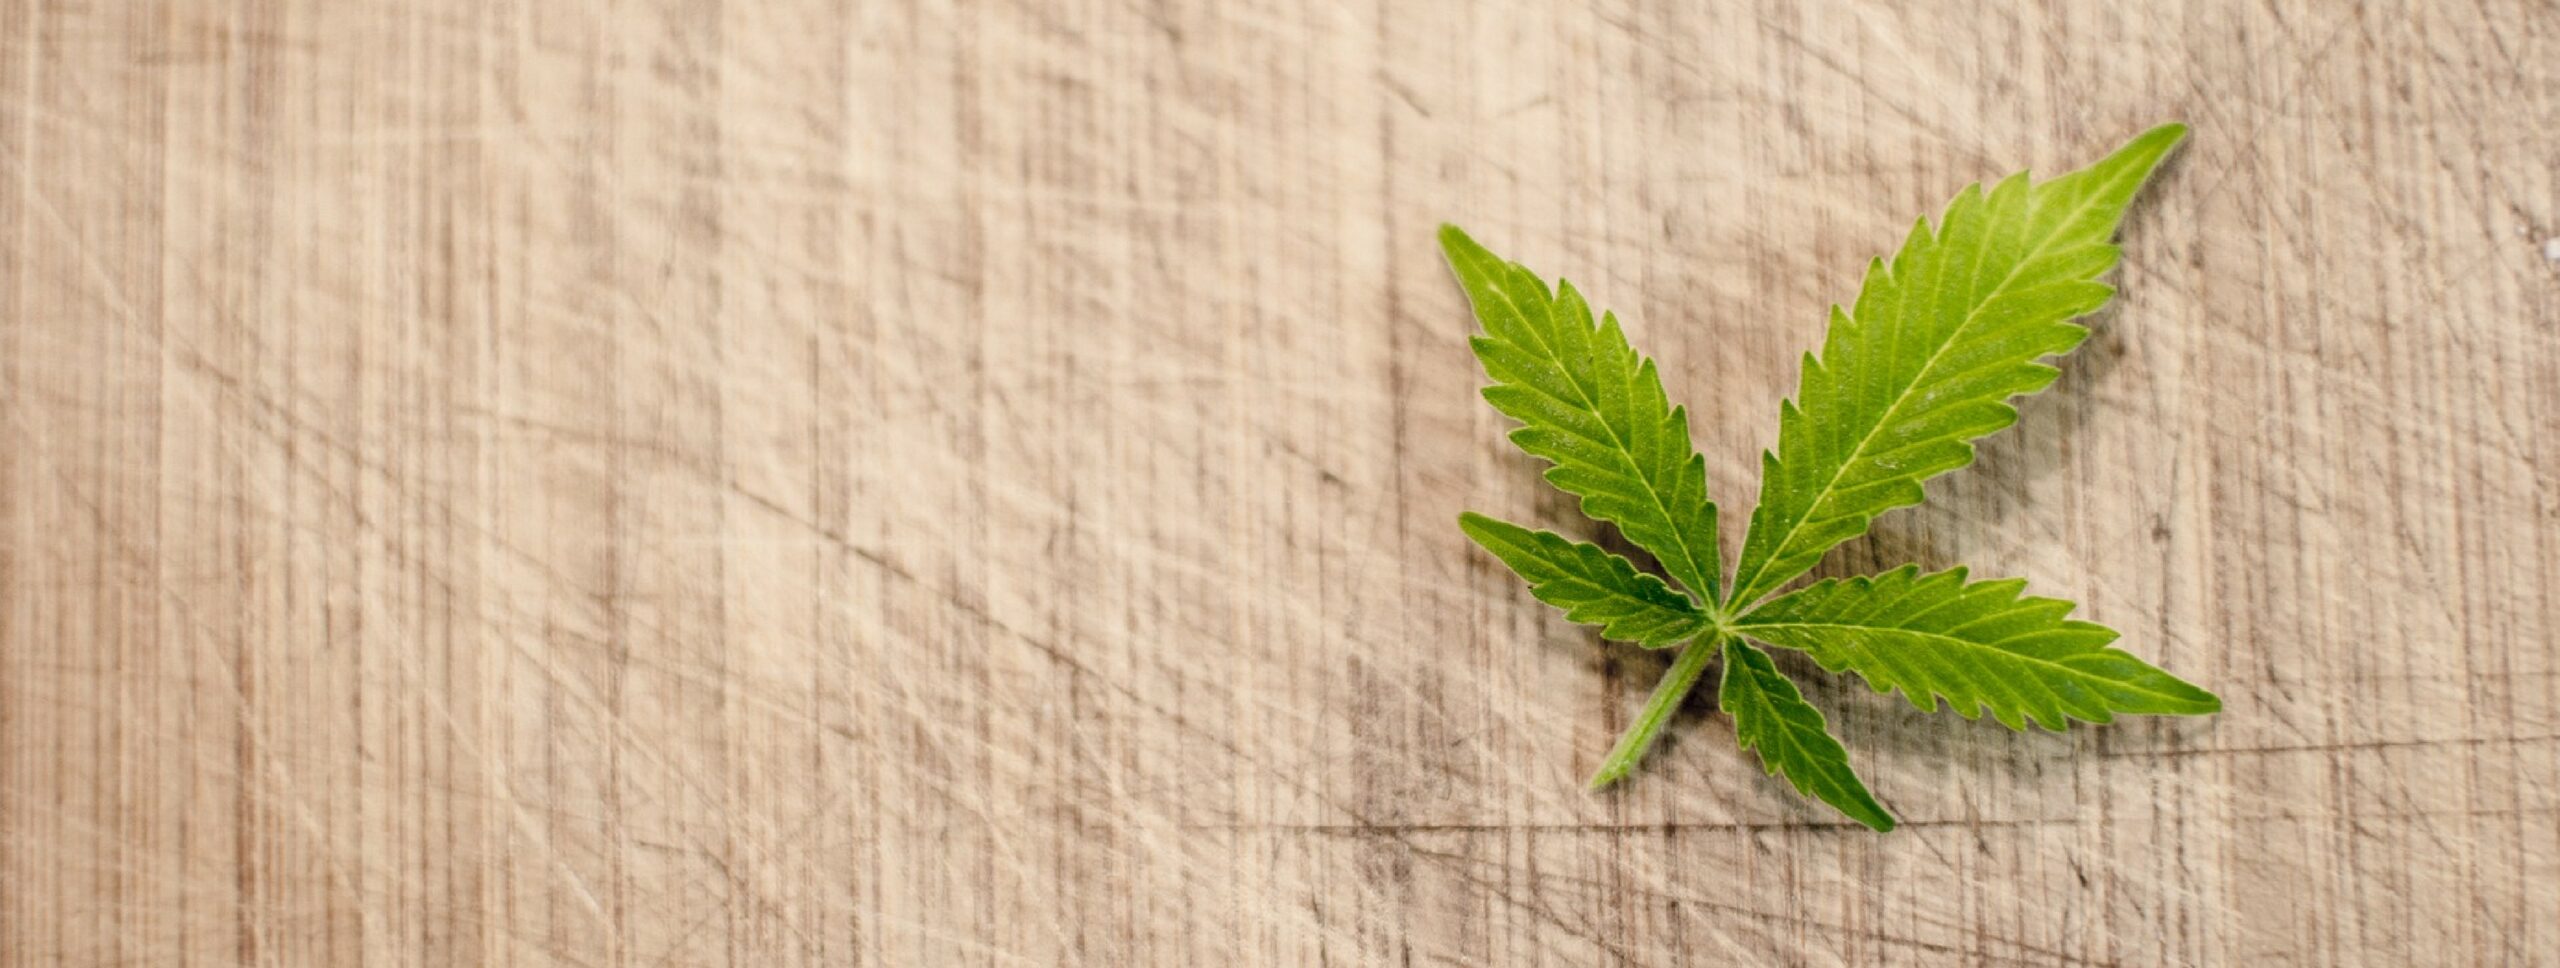 Cannabis Entrepreneurs COVID-19 News Update May 2020